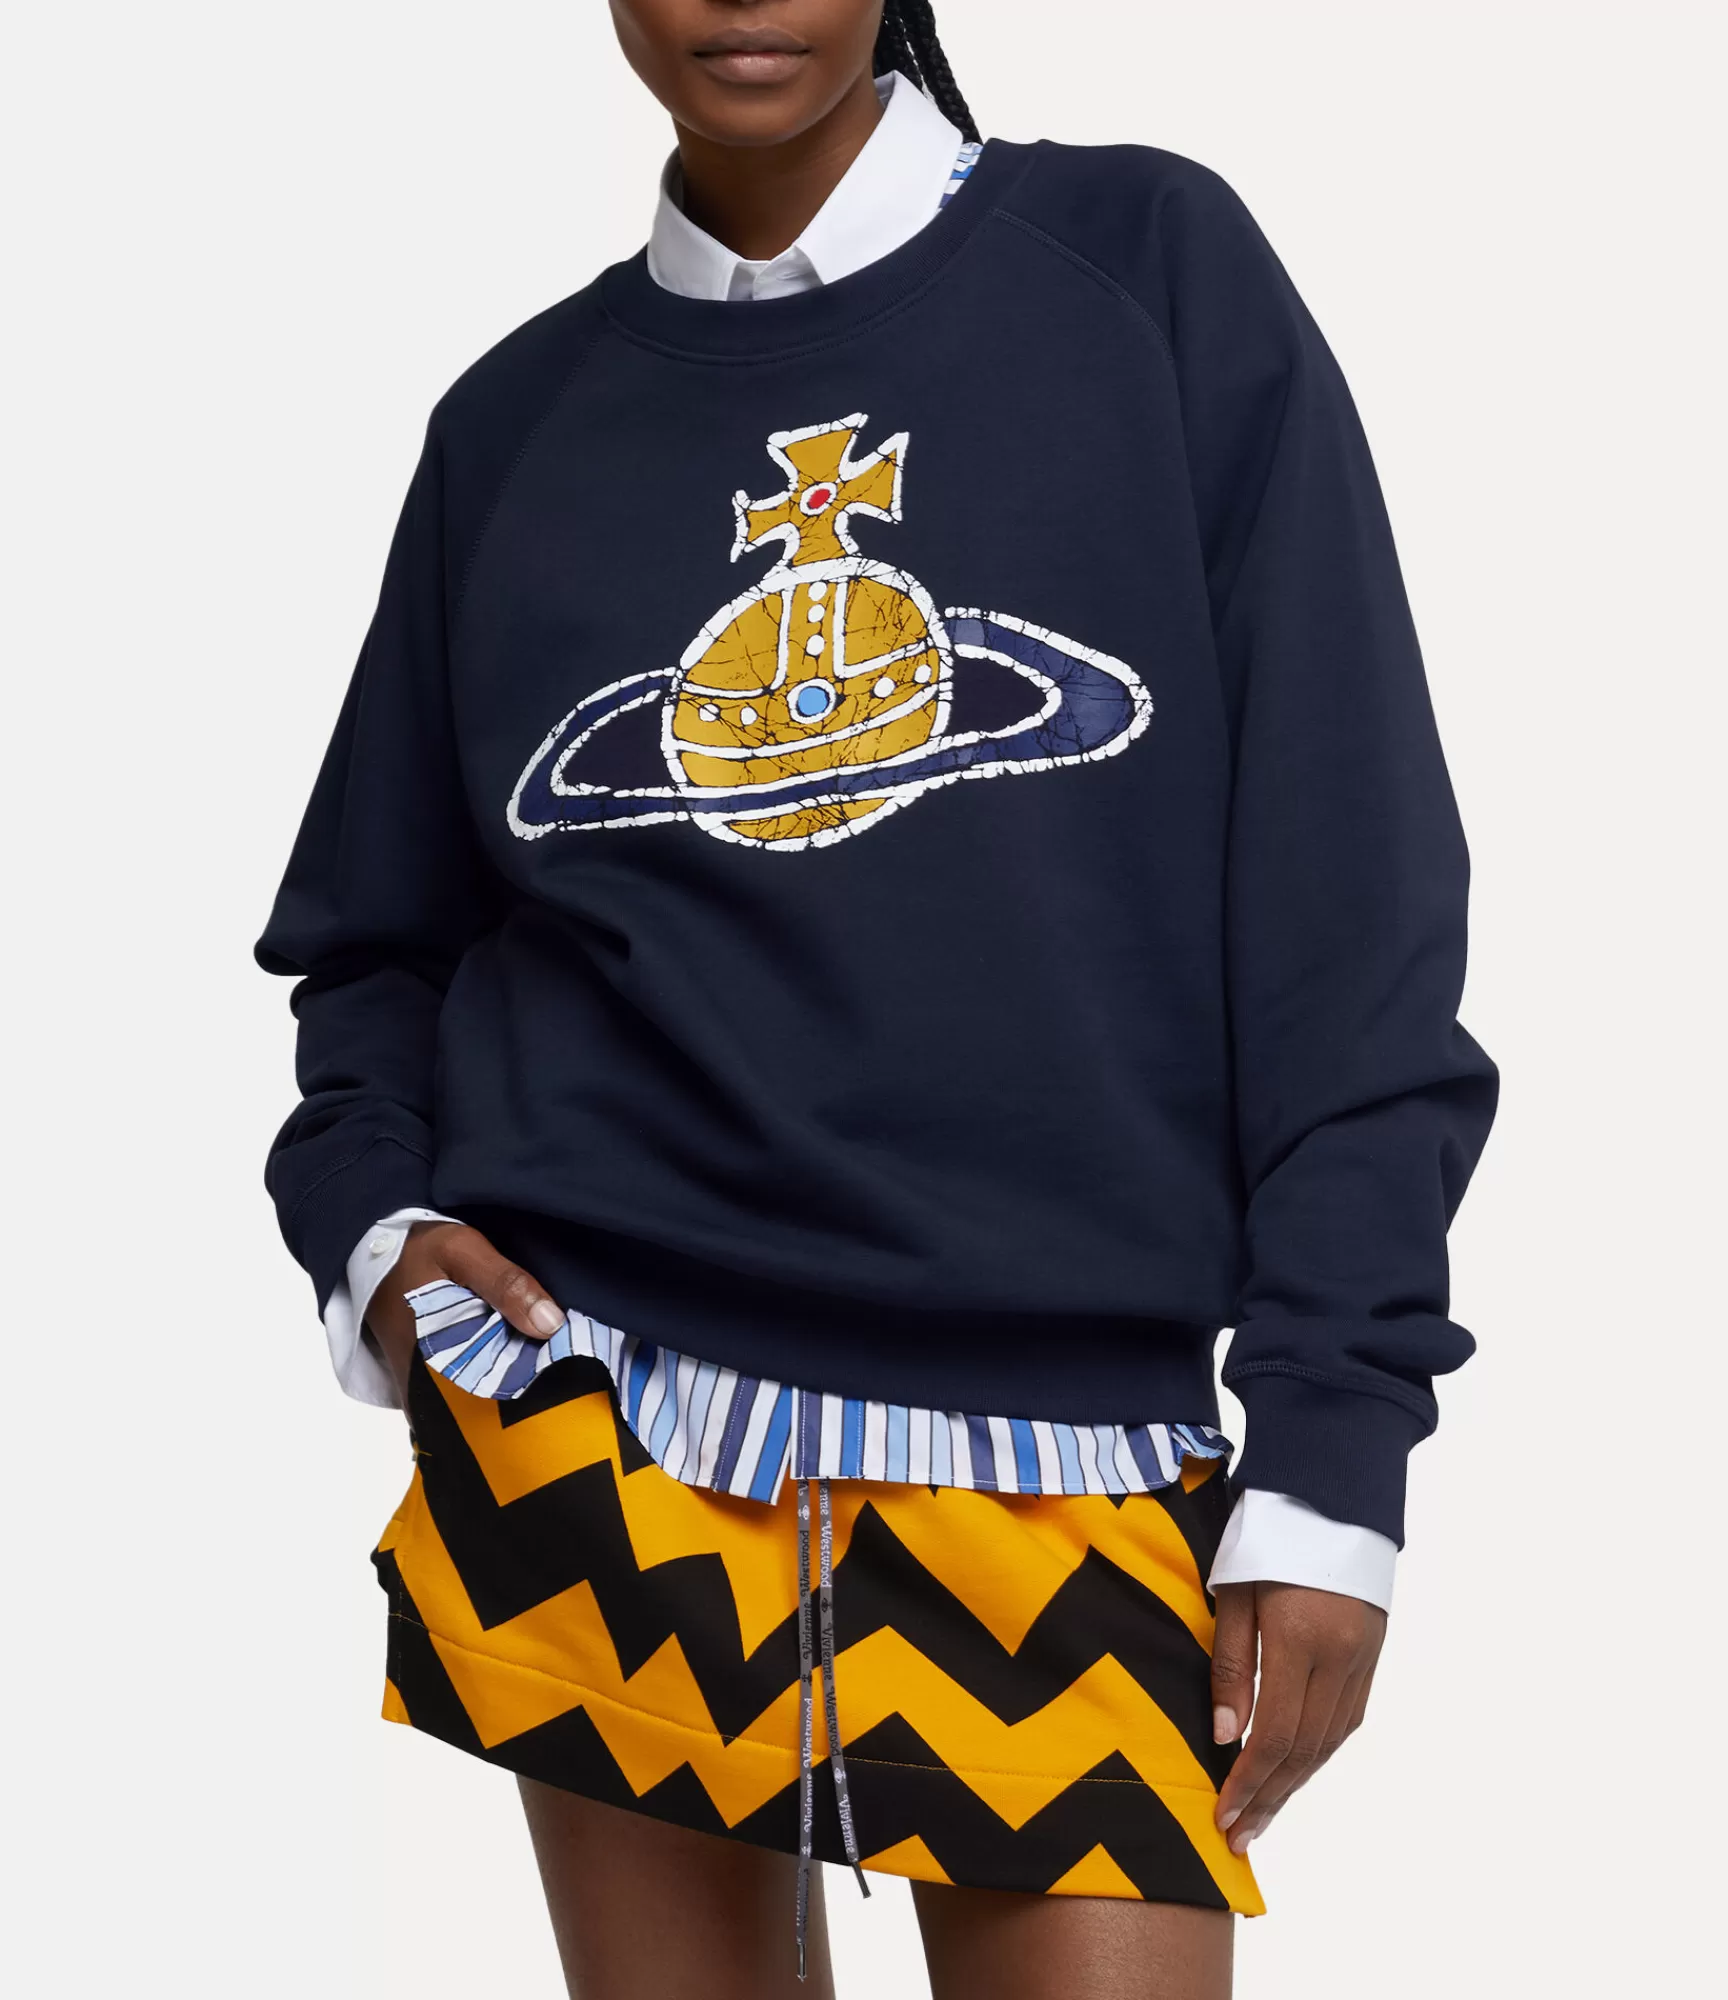 Vivienne Westwood Sweatshirts and T-Shirts*Time machine raglan sweatshirt Navy